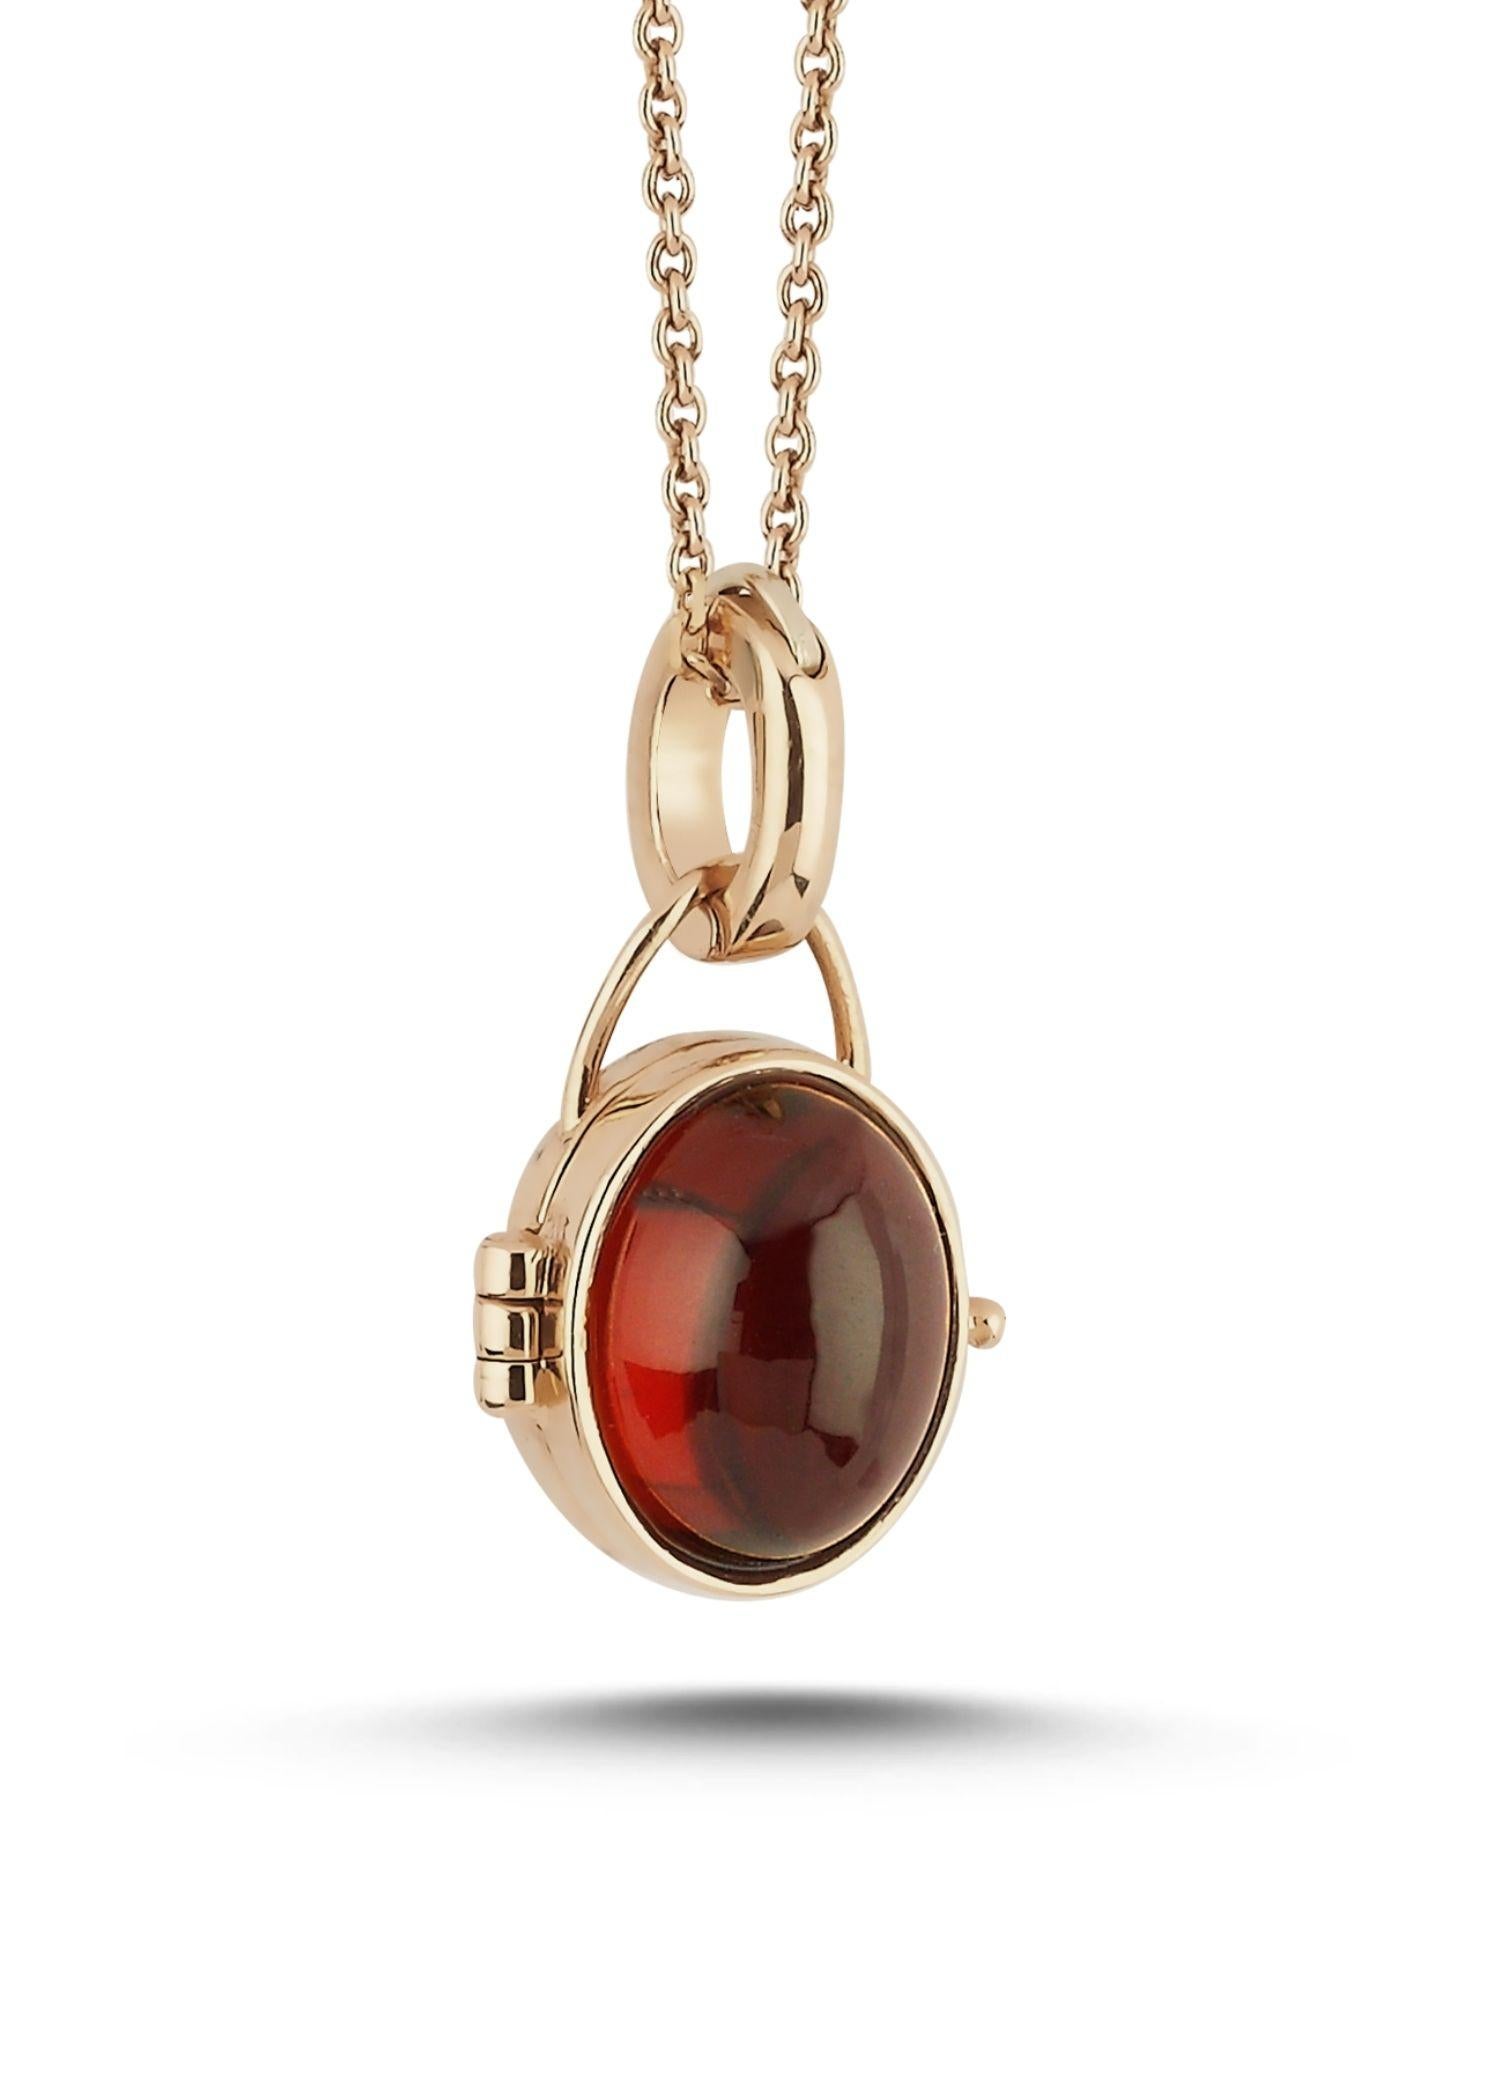 Melie Jewelry Garnet Locket Charm

14K Rose Gold, 7.54 ct Garnet

The Story Behind
Melie Jewelry's 